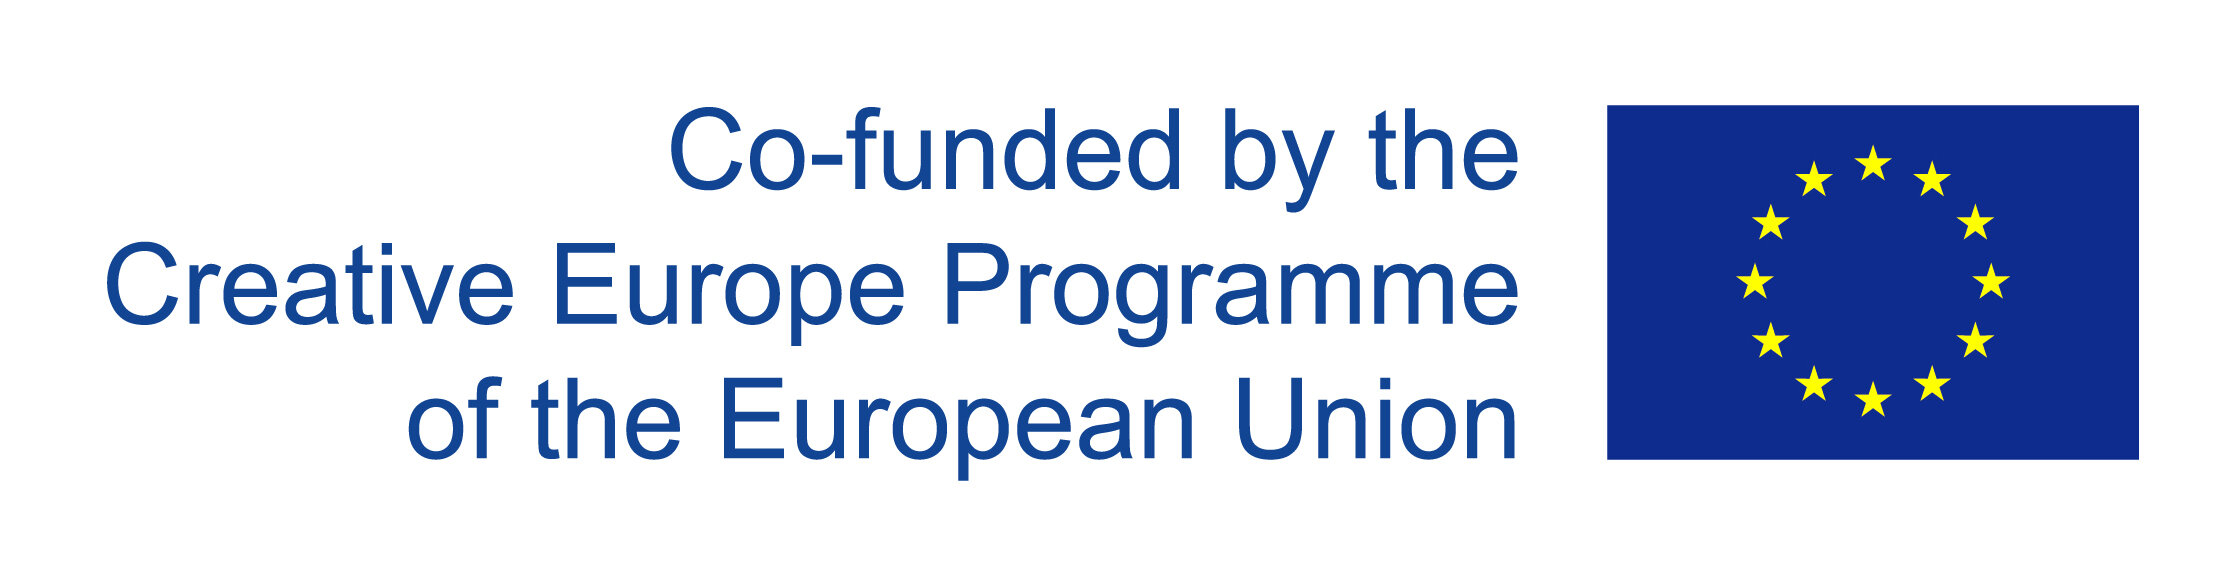 eu_flag_creative_europe_co_funded_pos_rgb_left.jpg